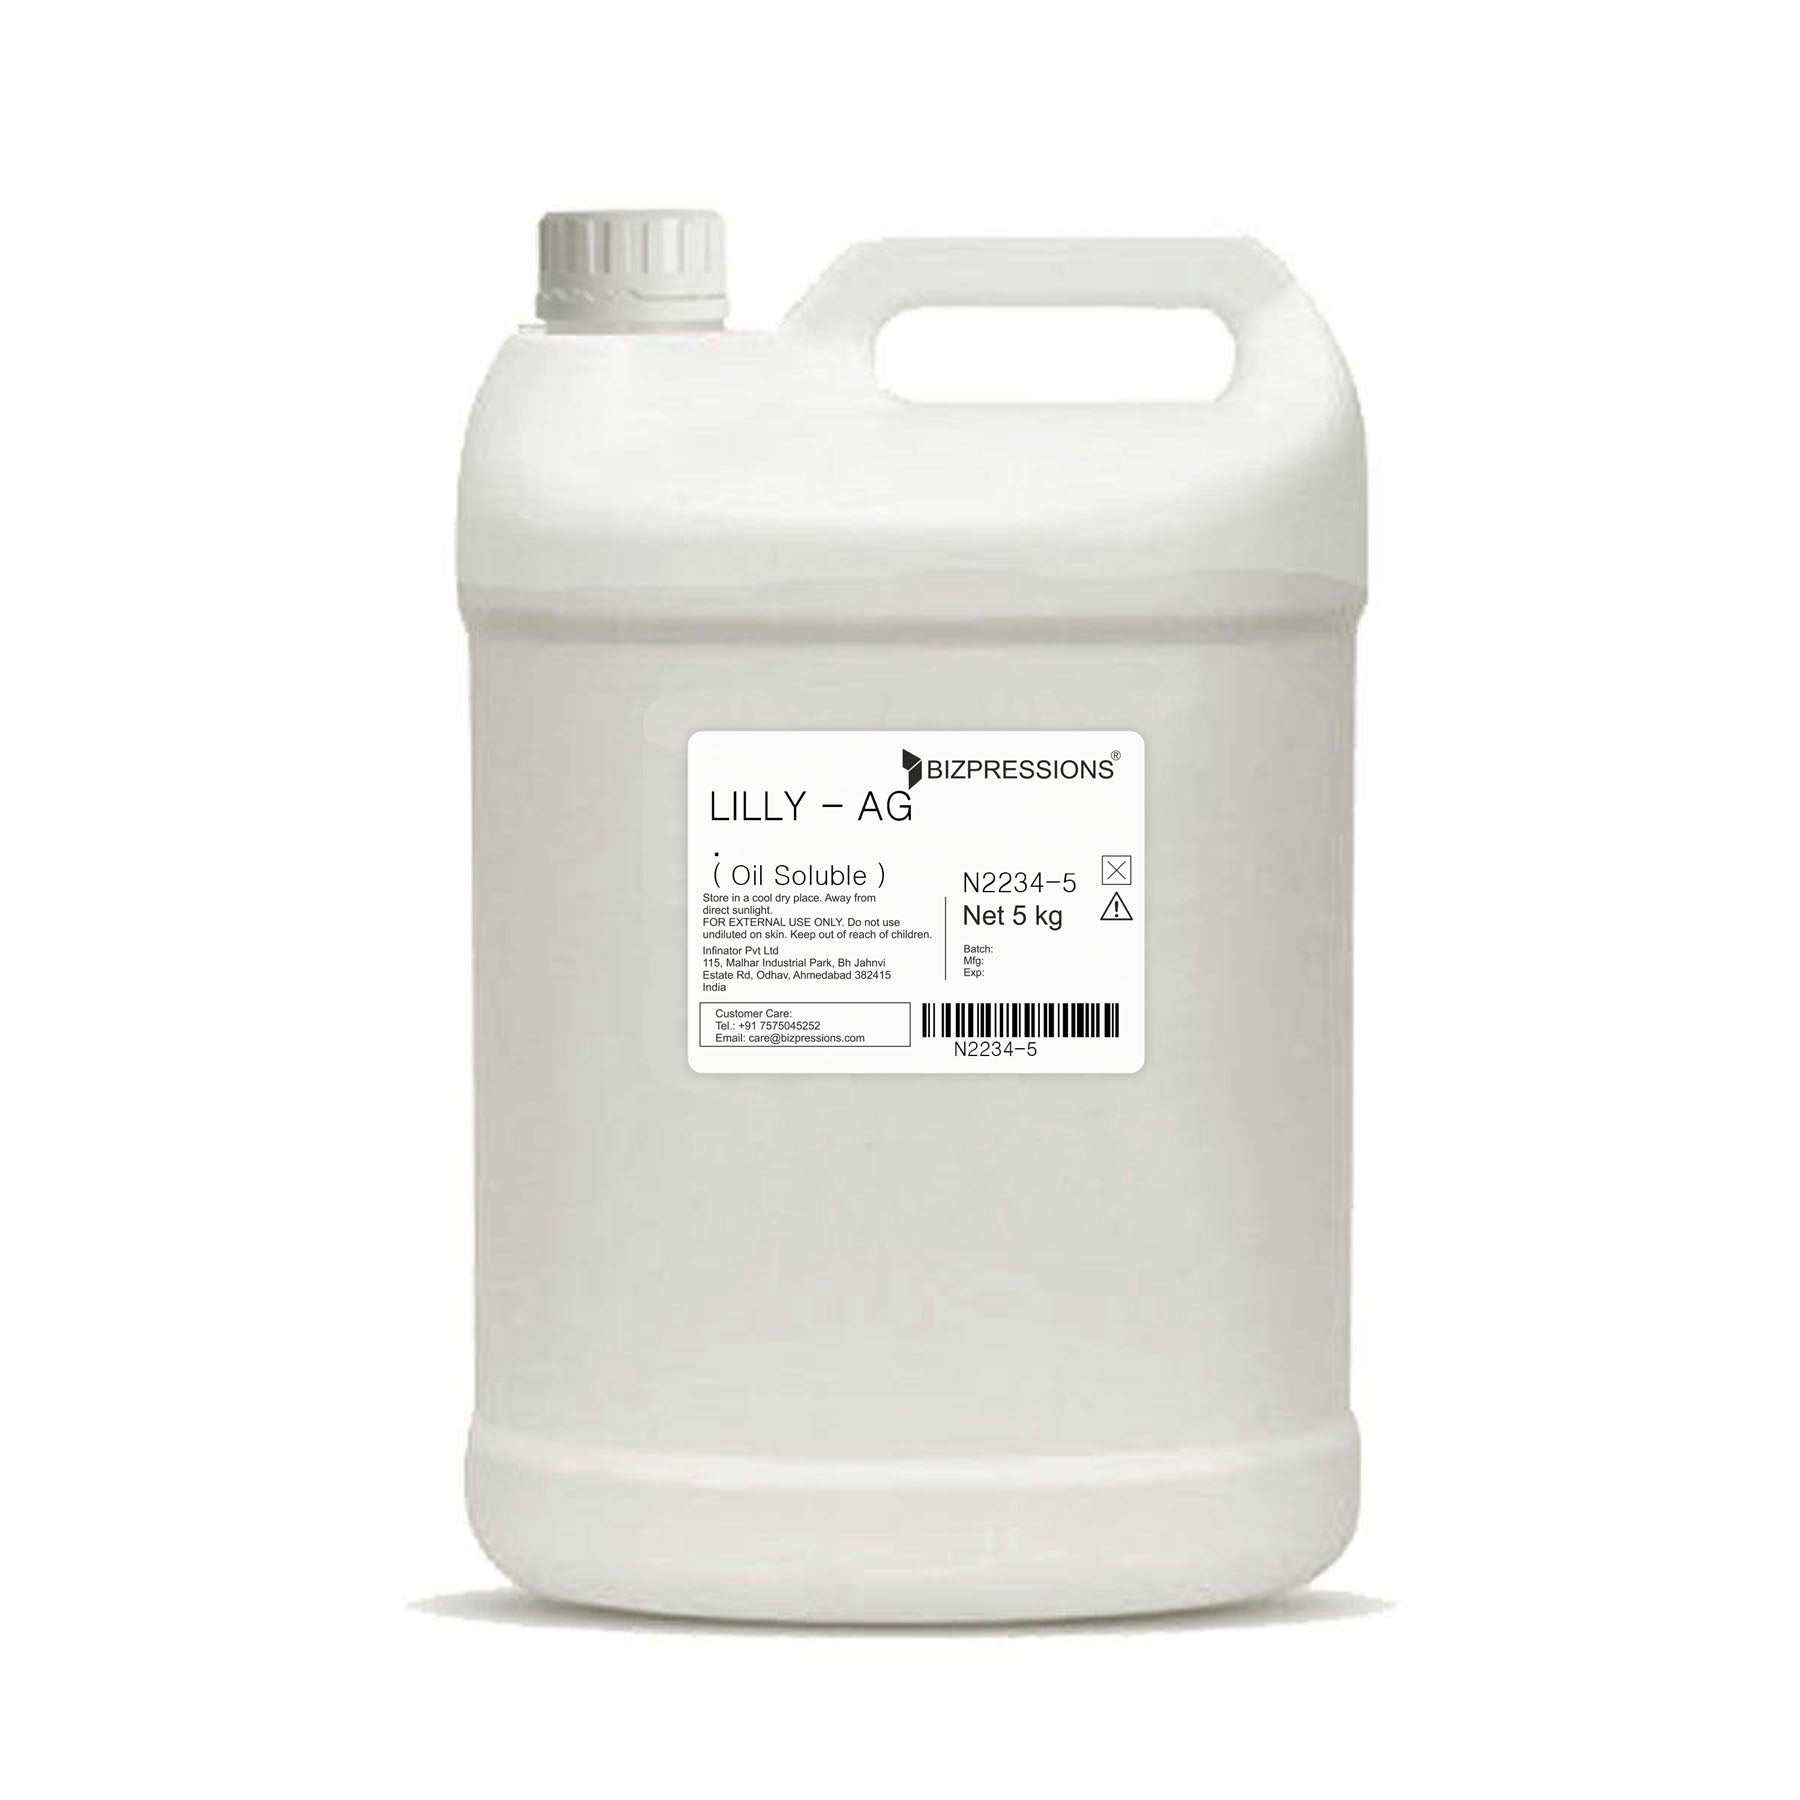 LILLY - AG - Fragrance ( Oil Soluble ) - 5 kg